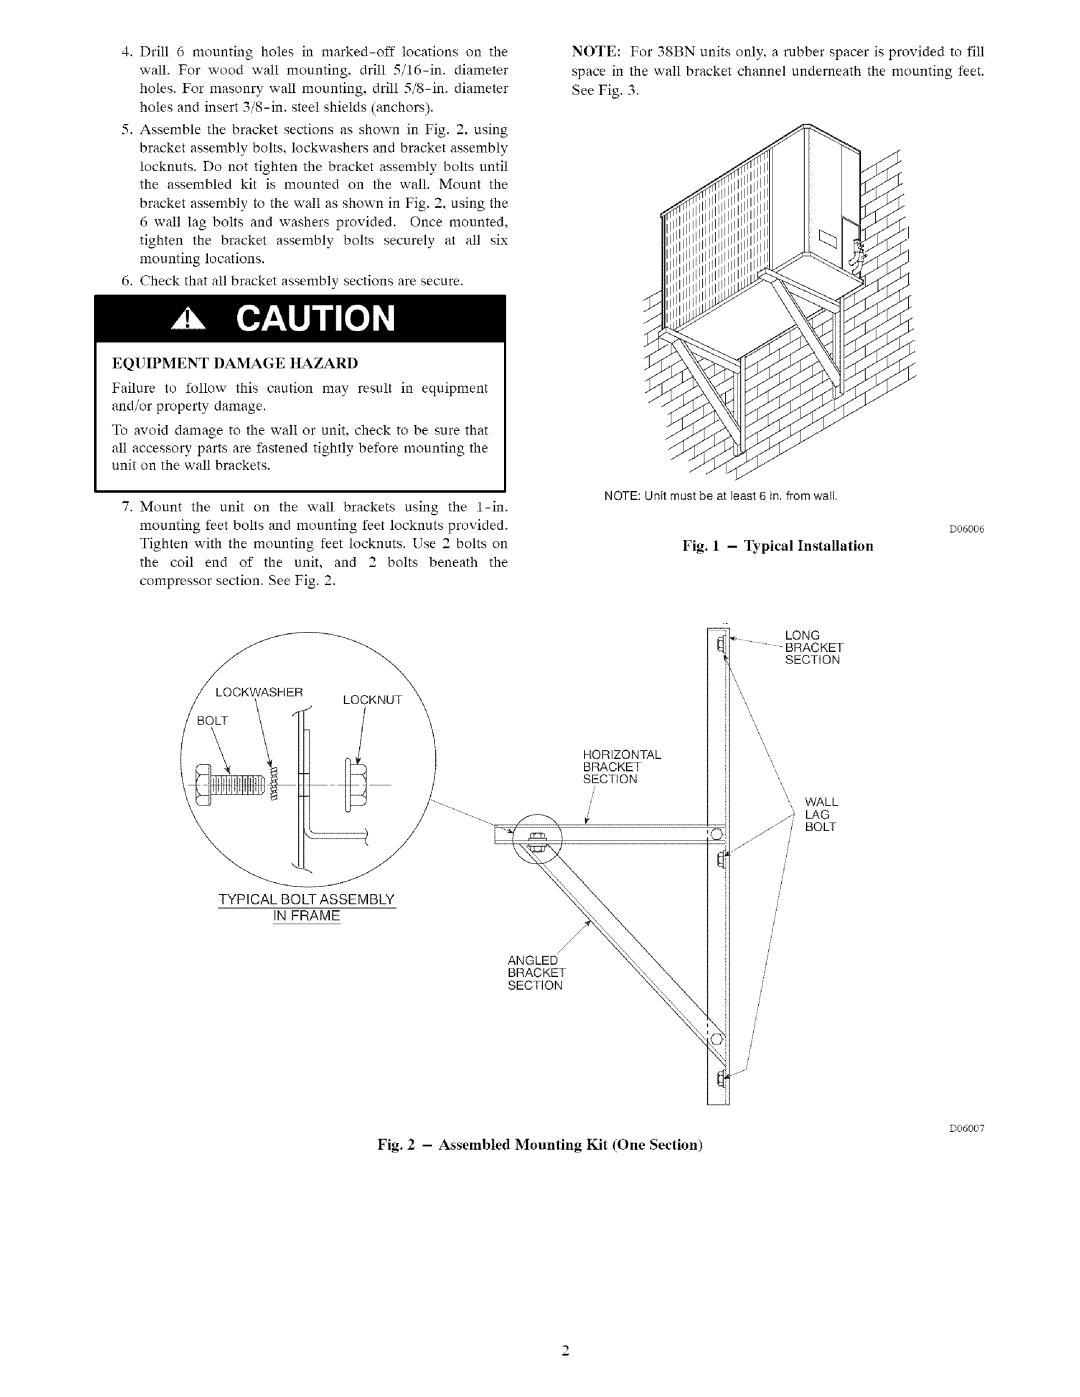 Sears 53DS900077, 53DS900078 installation instructions Bolt, holesandinsert3/8-insteelshieldsanchors, Equipmentdamagehazard 